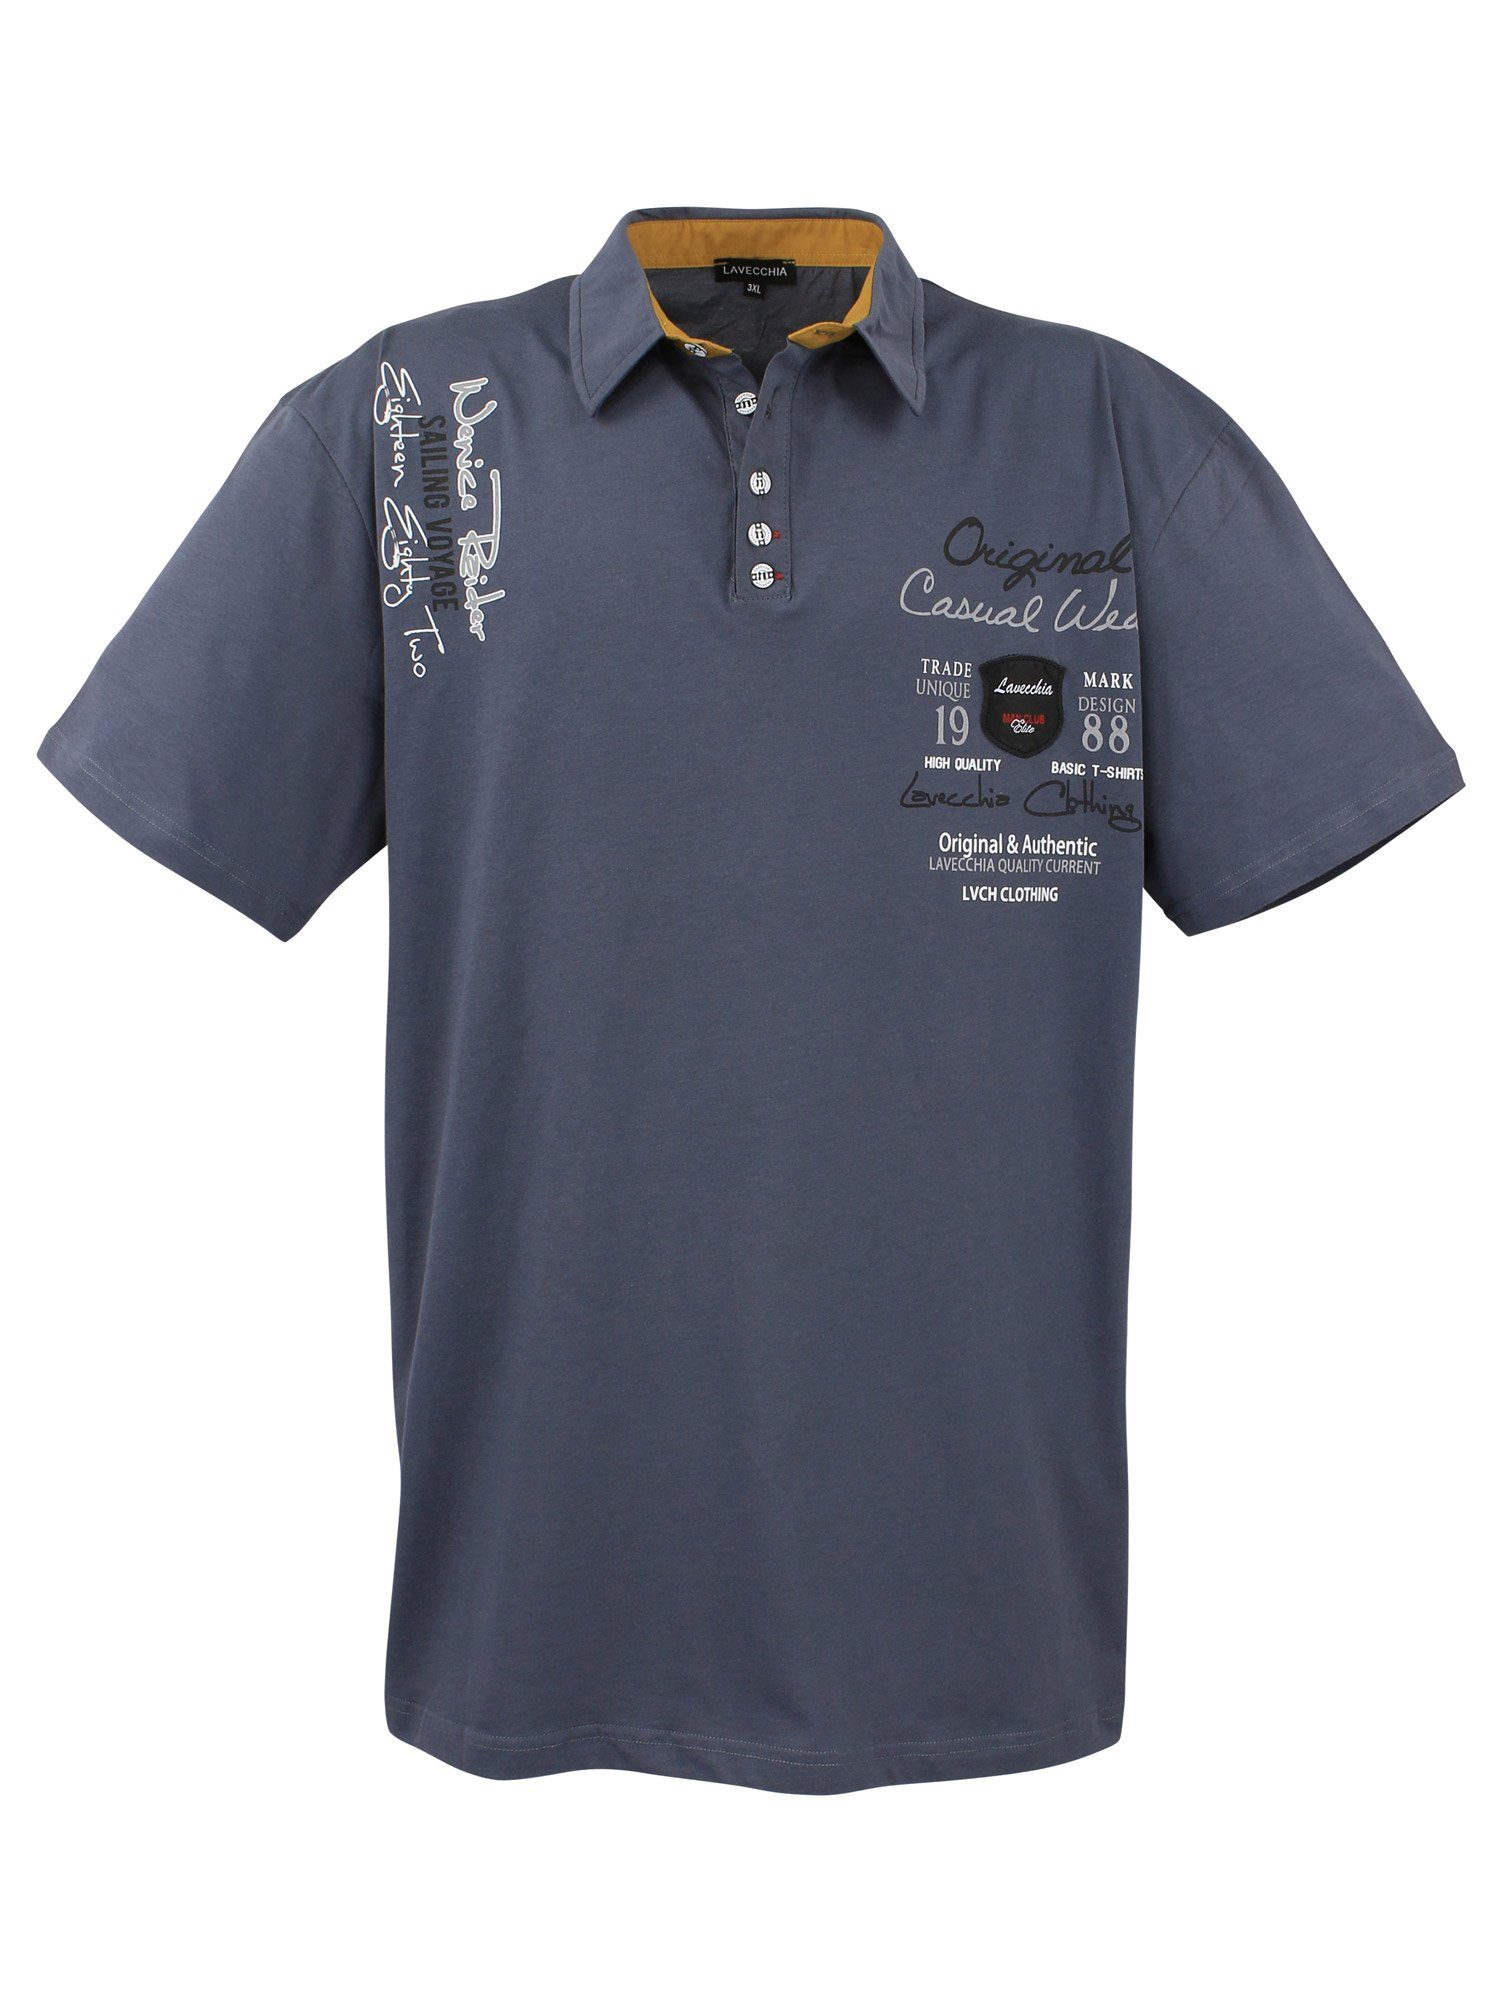 Lavecchia Poloshirt Übergrößen Herren Polo Shirt LV-610 Herren Polo Shirt anthrazit